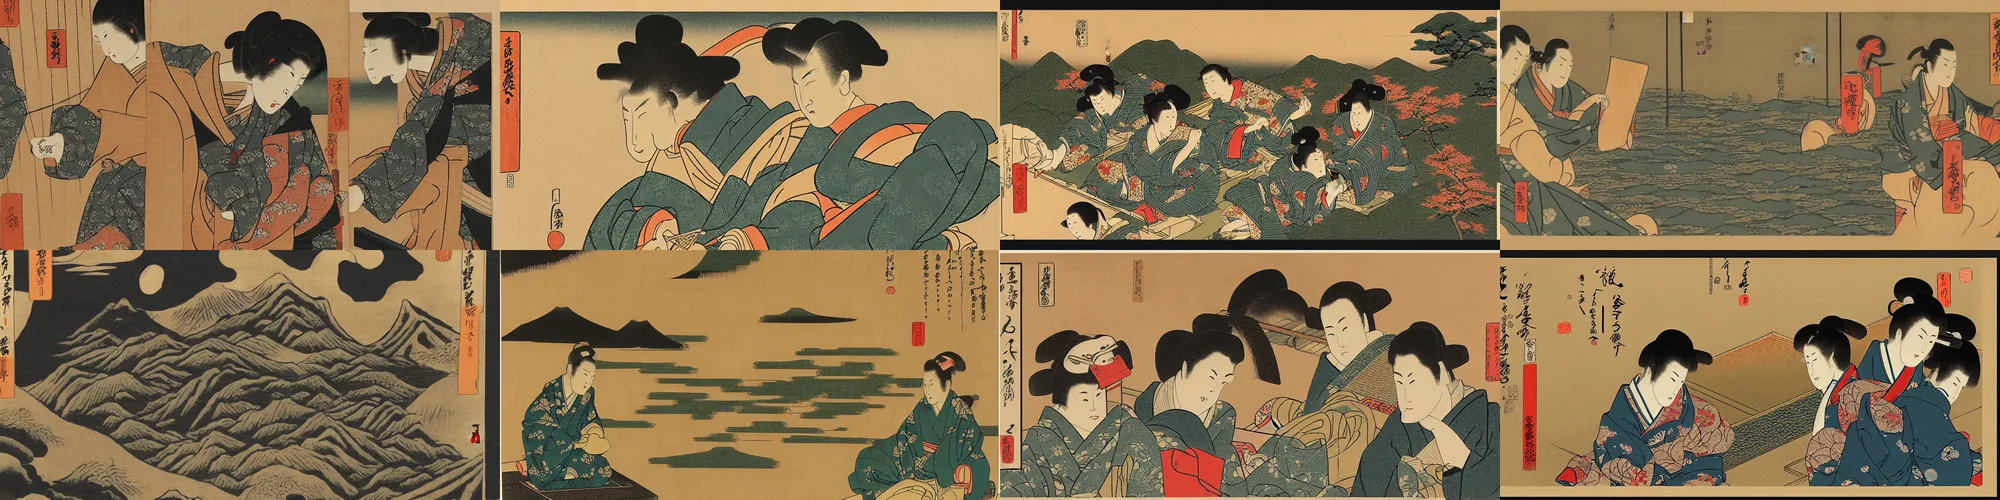 Prompt: computers of ancient Japan, Ukiyo-e wood block print